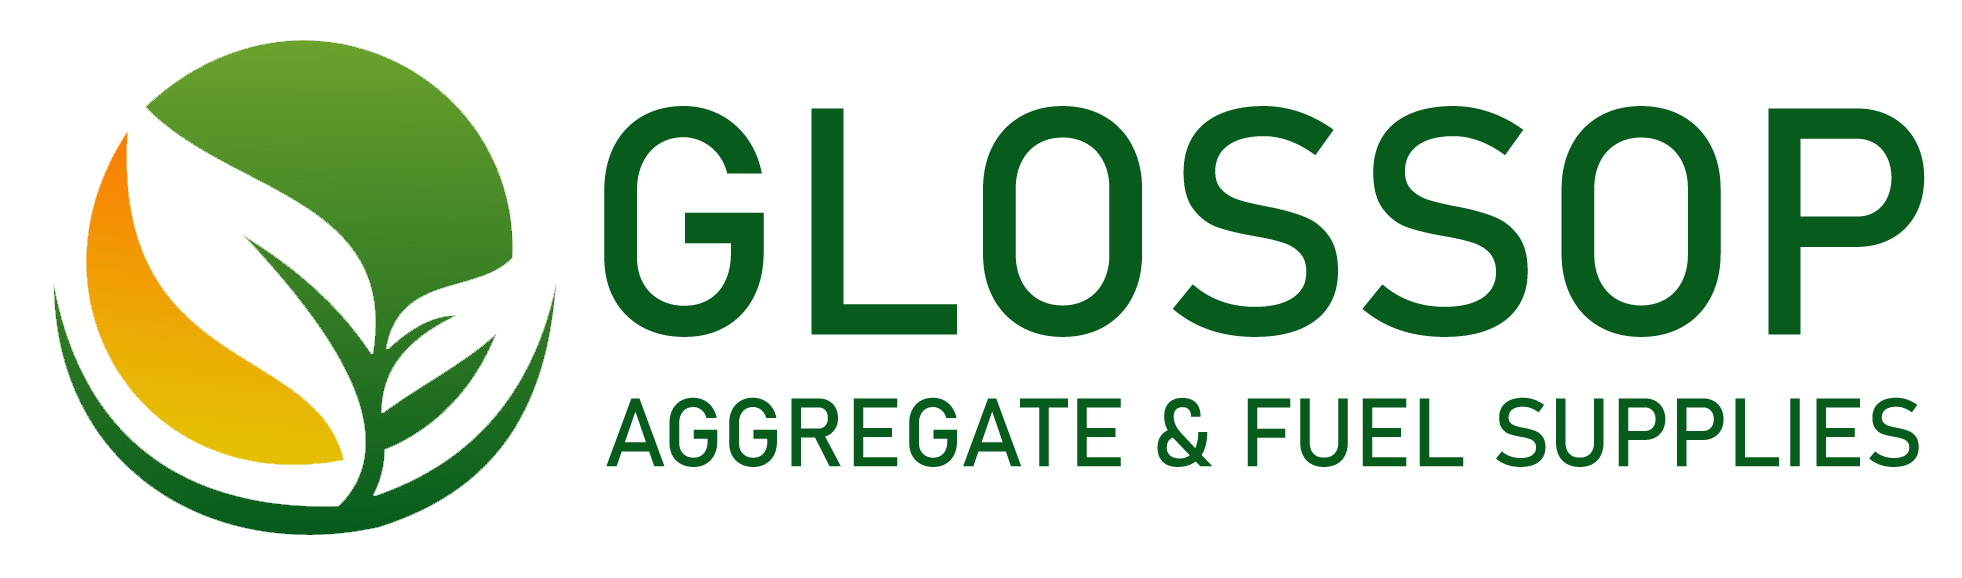 Glossop Coal and Log Supplies